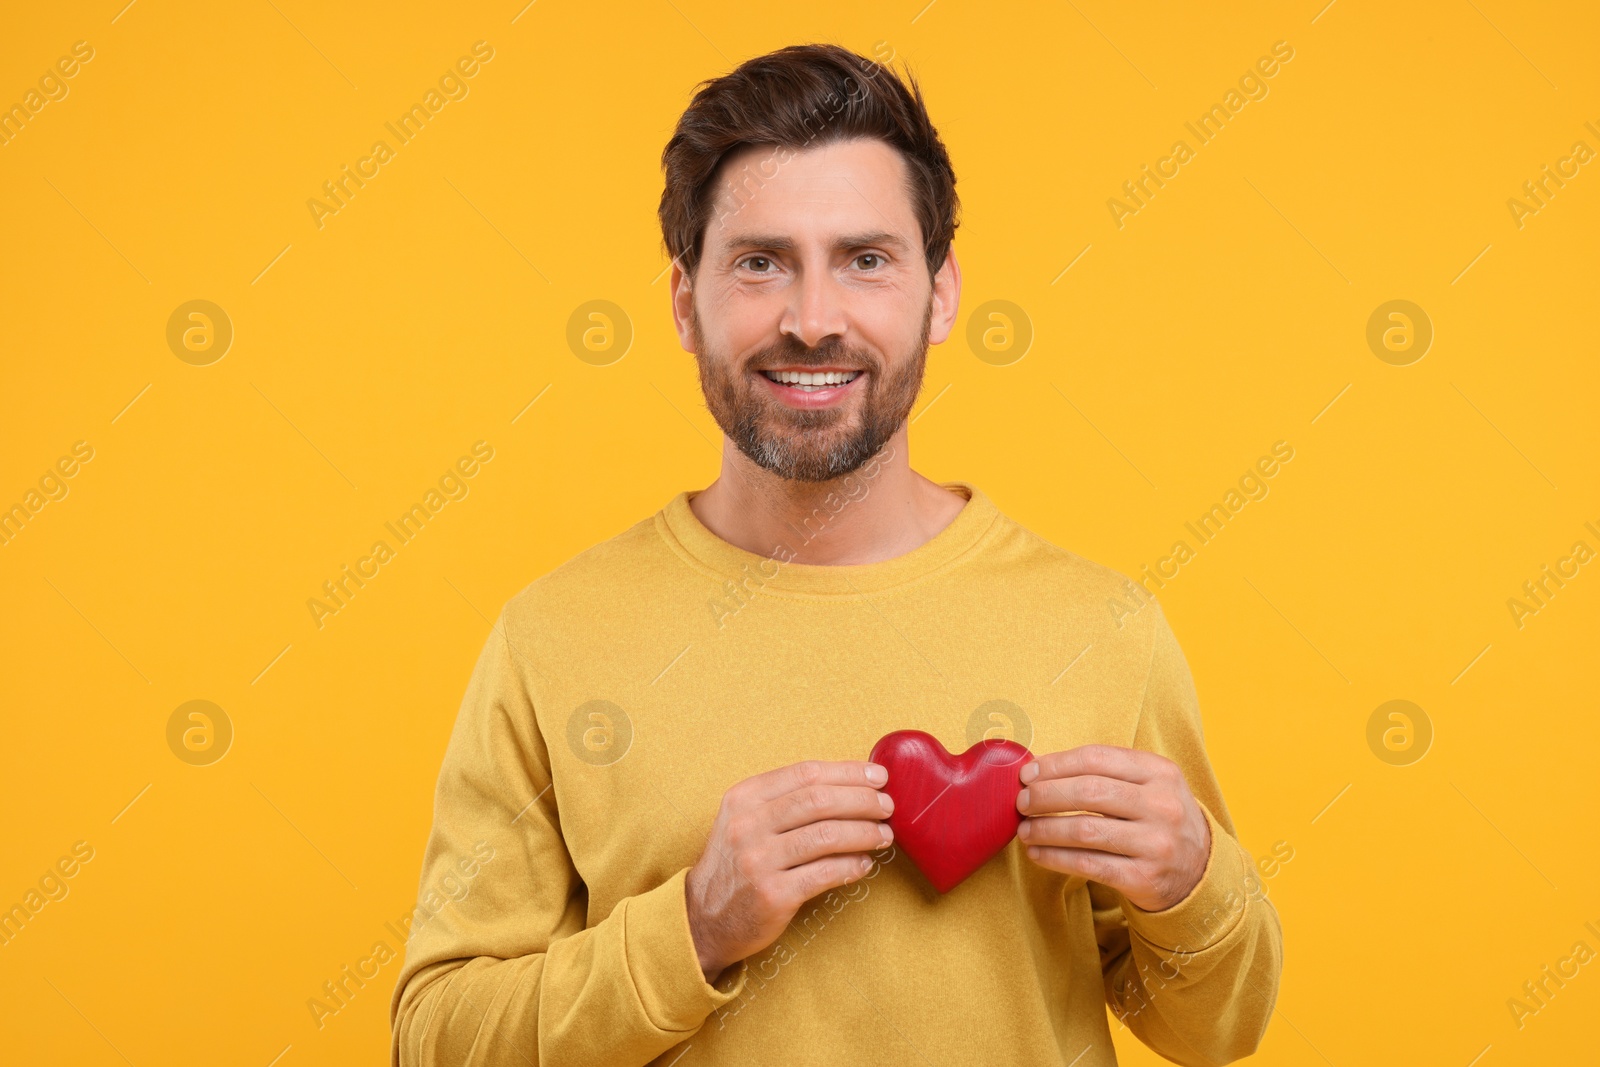 Photo of Happy man holding red heart on orange background